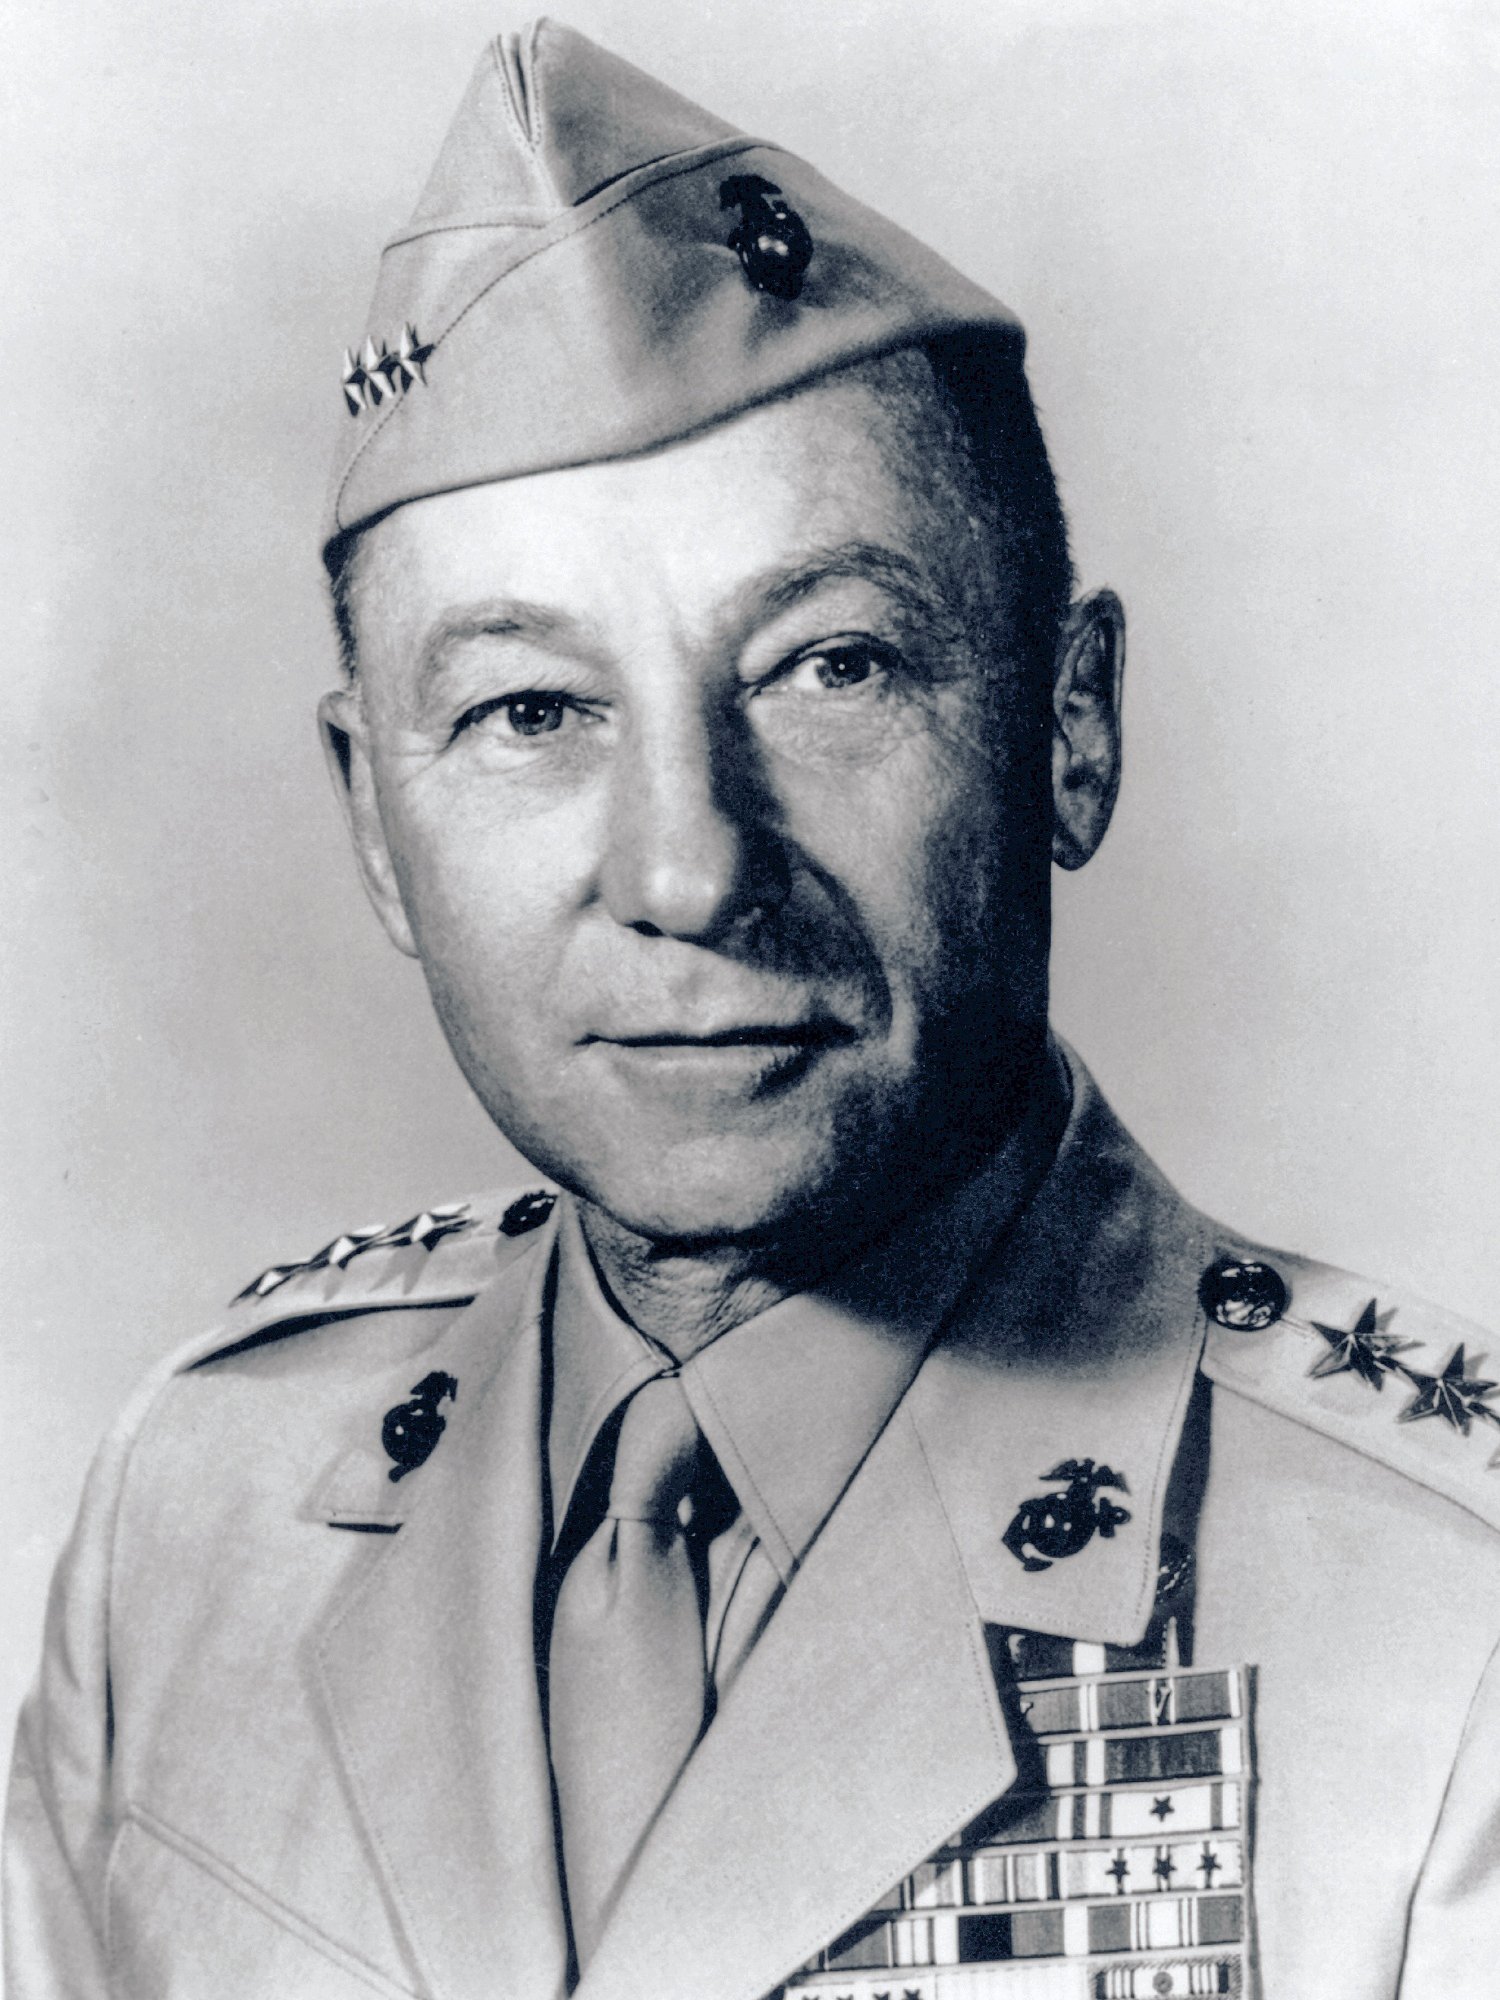 Portrait of General Victor Krulak, U.S. Marine Corps